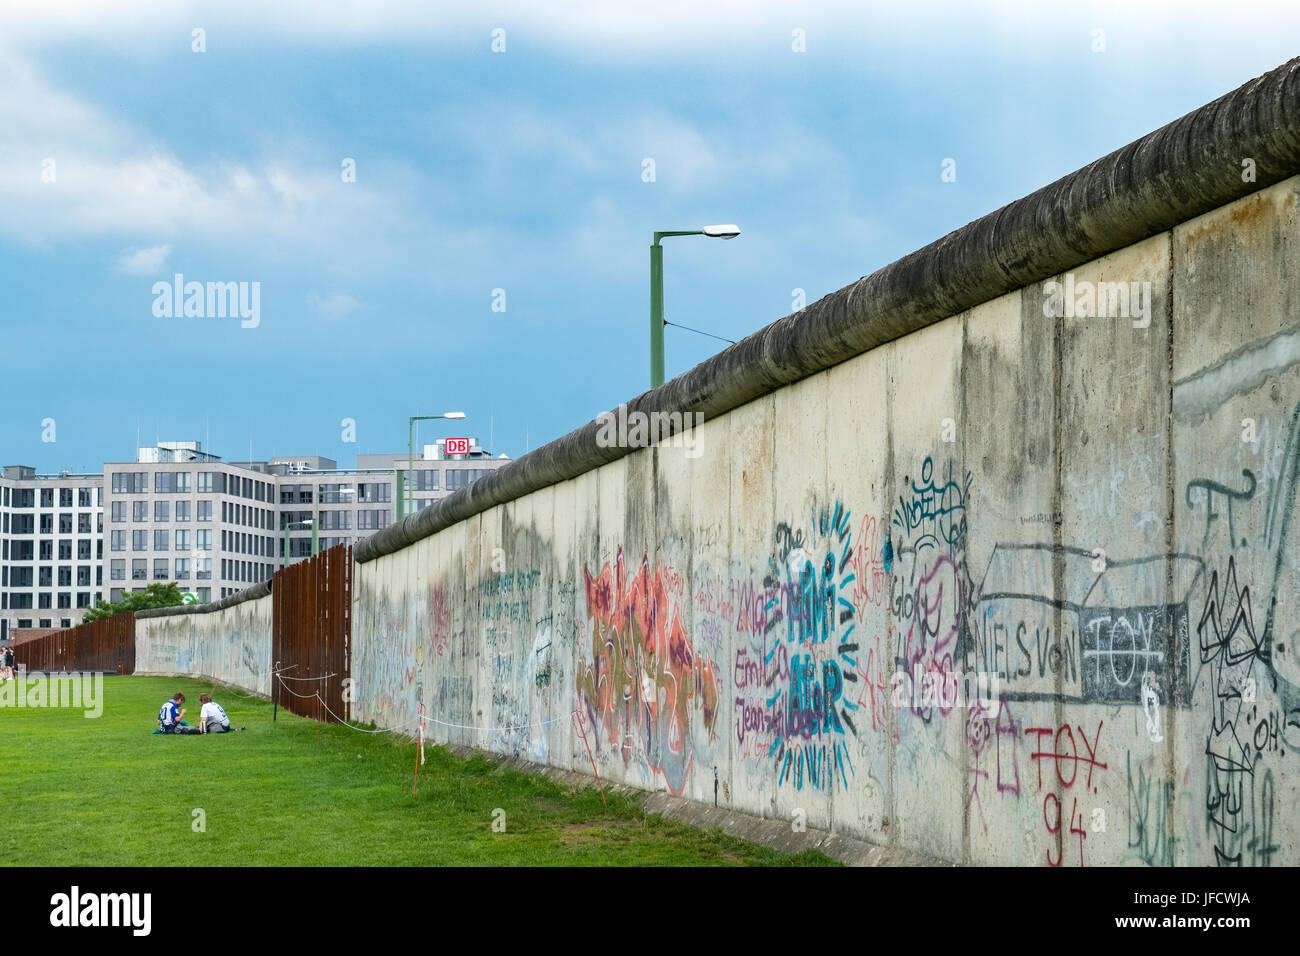 Graffiti on former Berlin Wall at Berlin Wall memorial park at Bernauer Strasse in Berlin, Germany Stock Photo